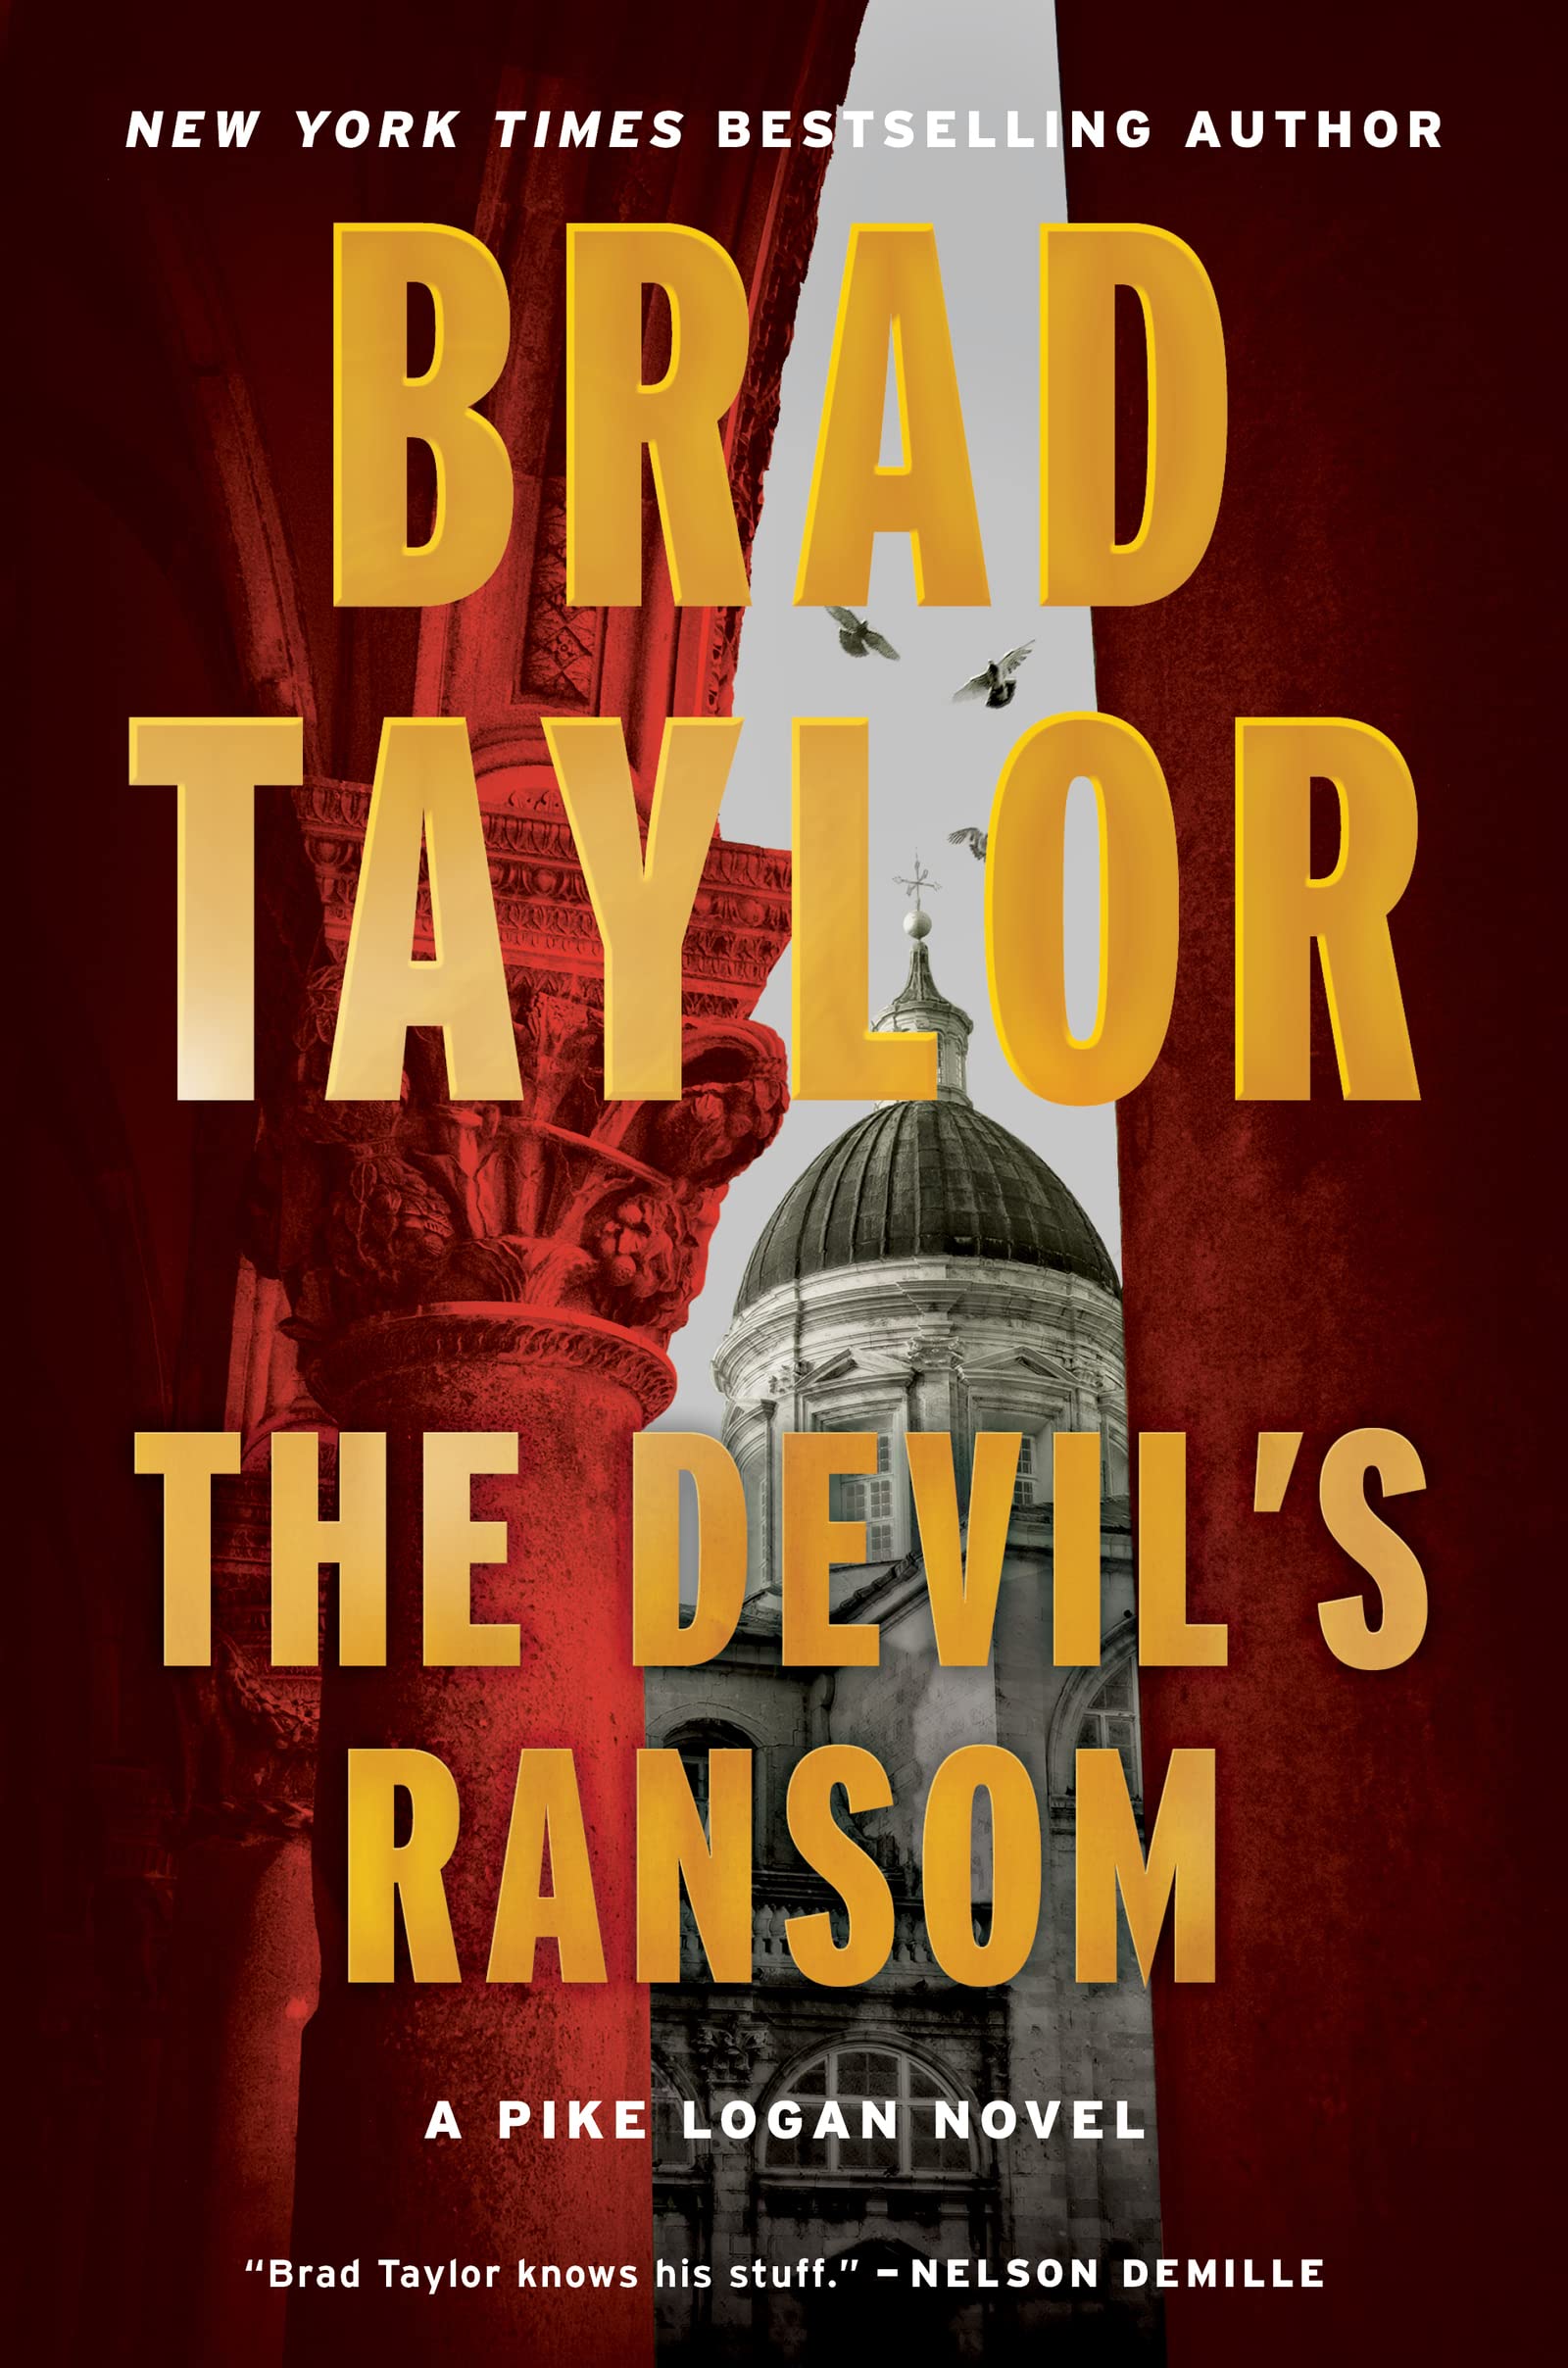 Image for "The Devil's Ransom"